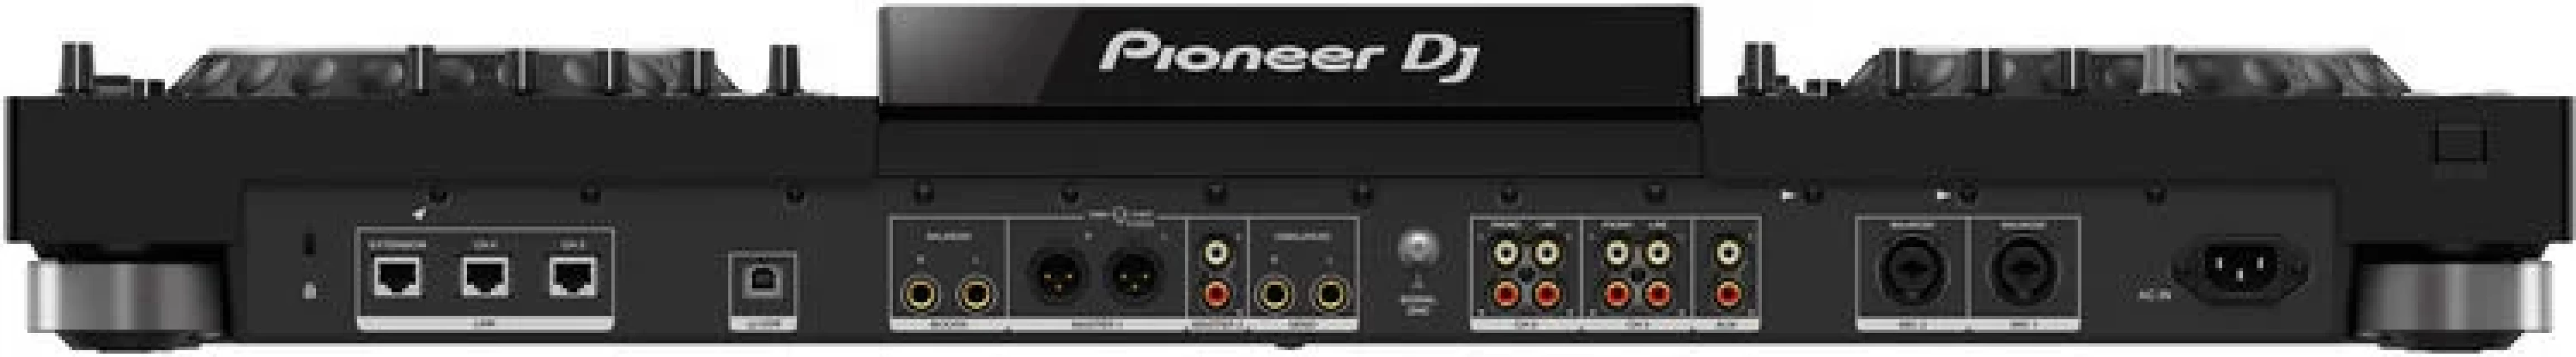 Pioneer DJ XDJ-XZ Digital DJ System - Pro-Quality All-in-One Mixer